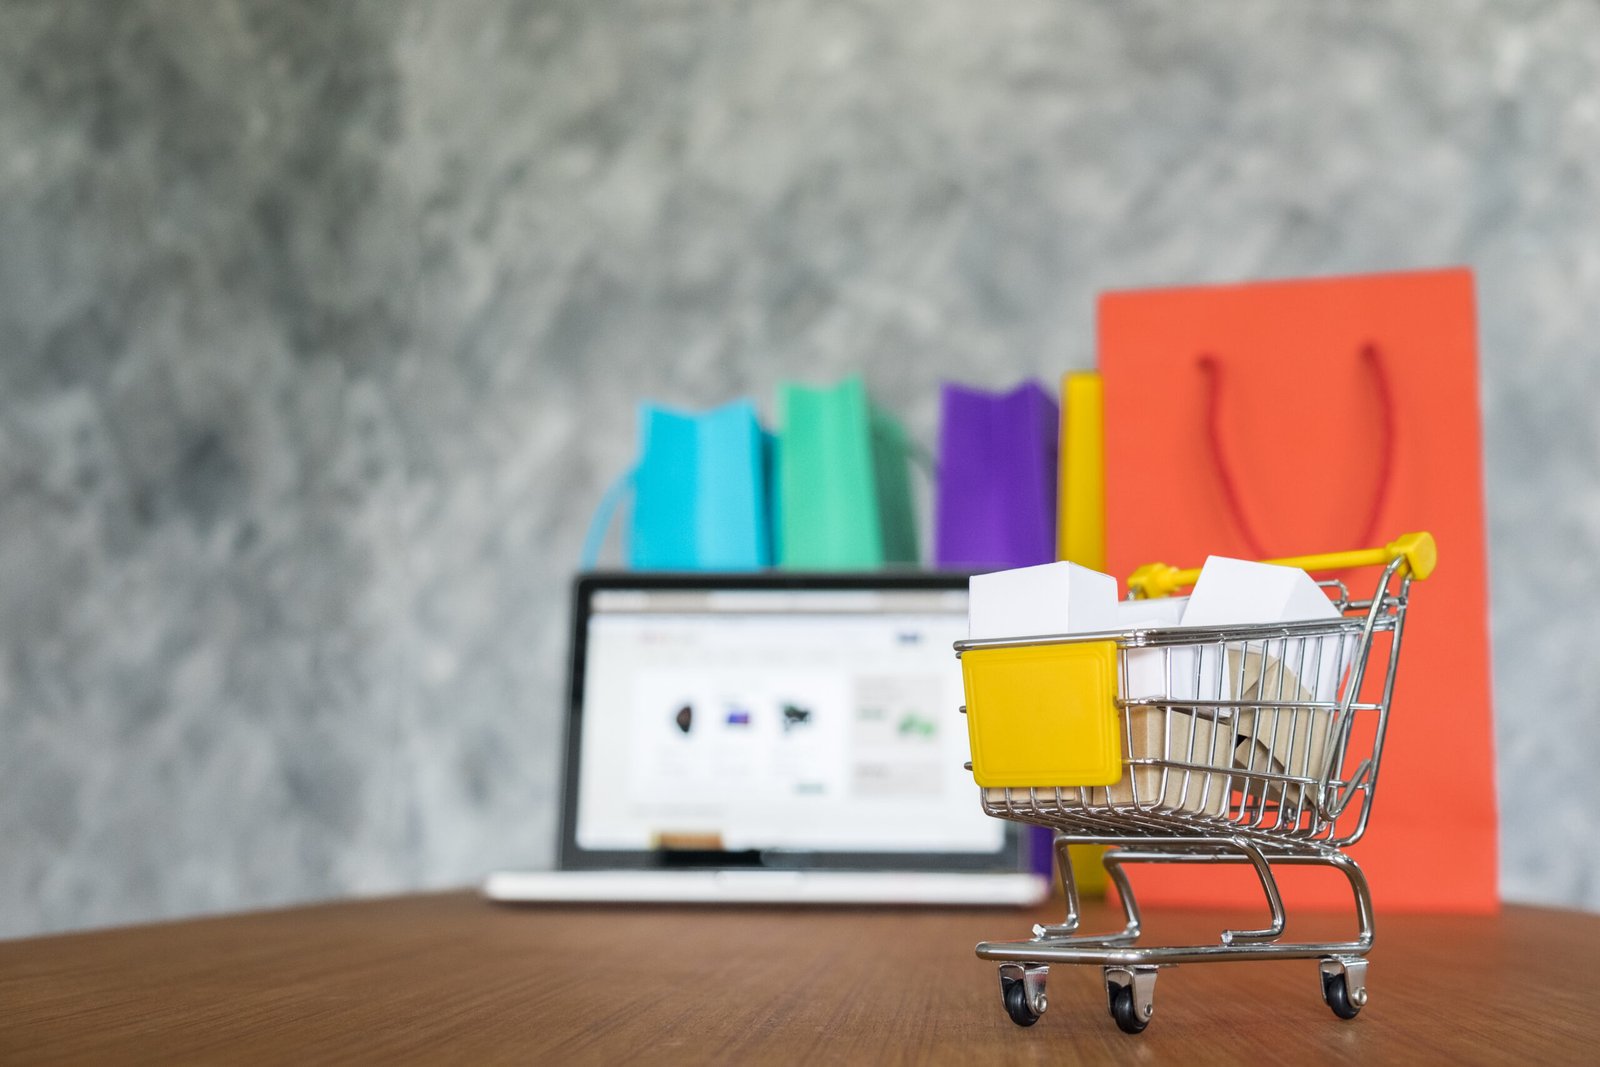 E-commerce Marketing Strategies